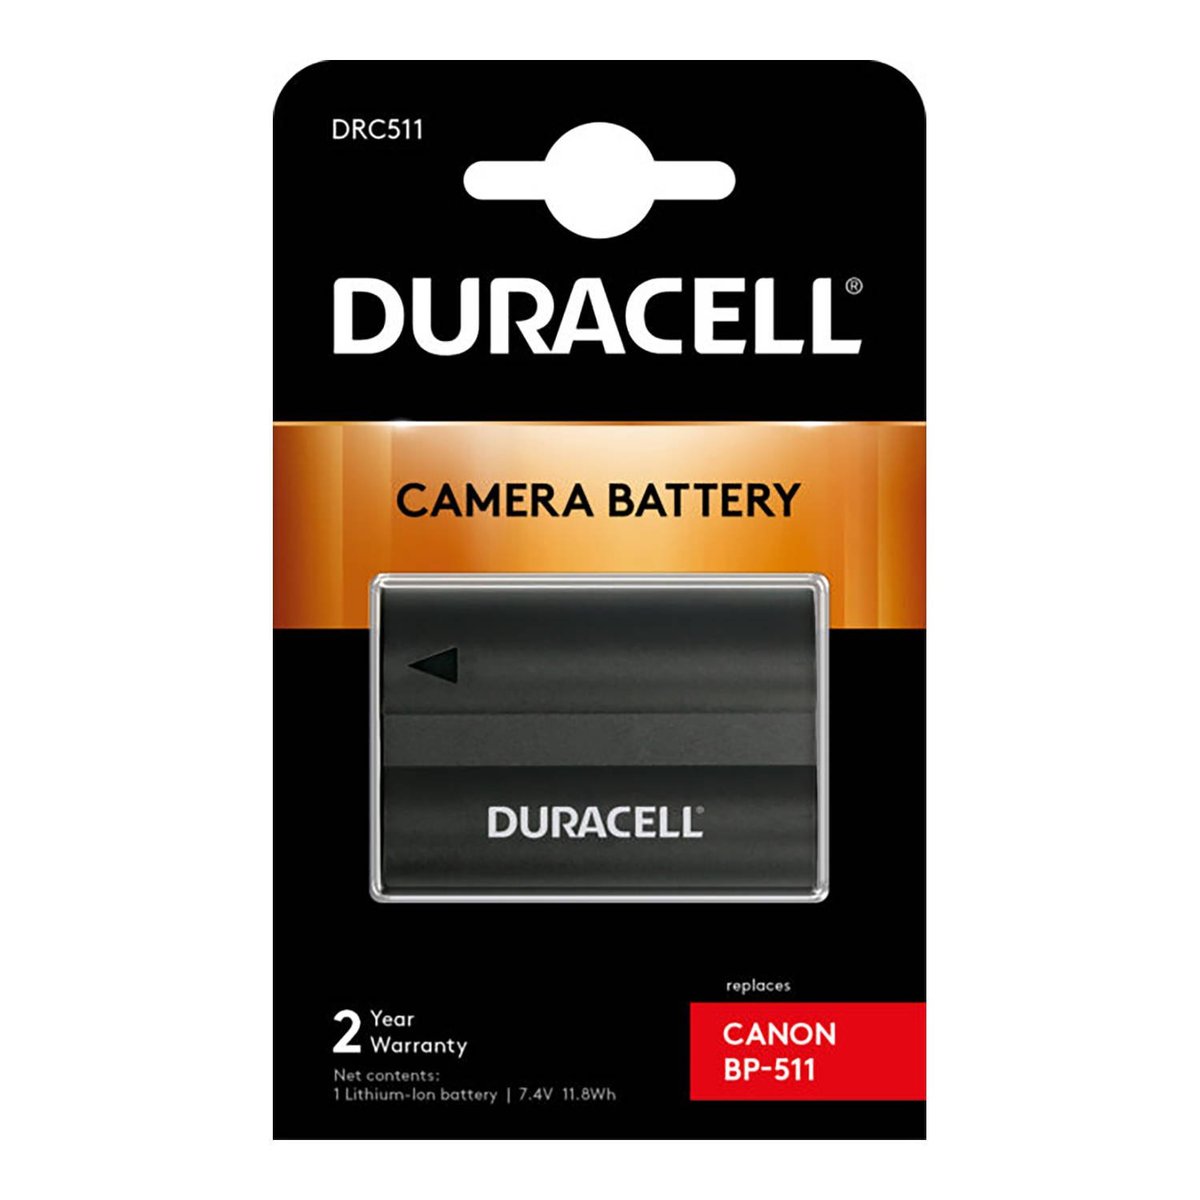 Zdjęcia - Akumulator do aparatu fotograficznego Duracell Bateria  DRC511 7,4V 1600mAh Li-Ion - Canon BP-508 / BP-511 / BP-5 